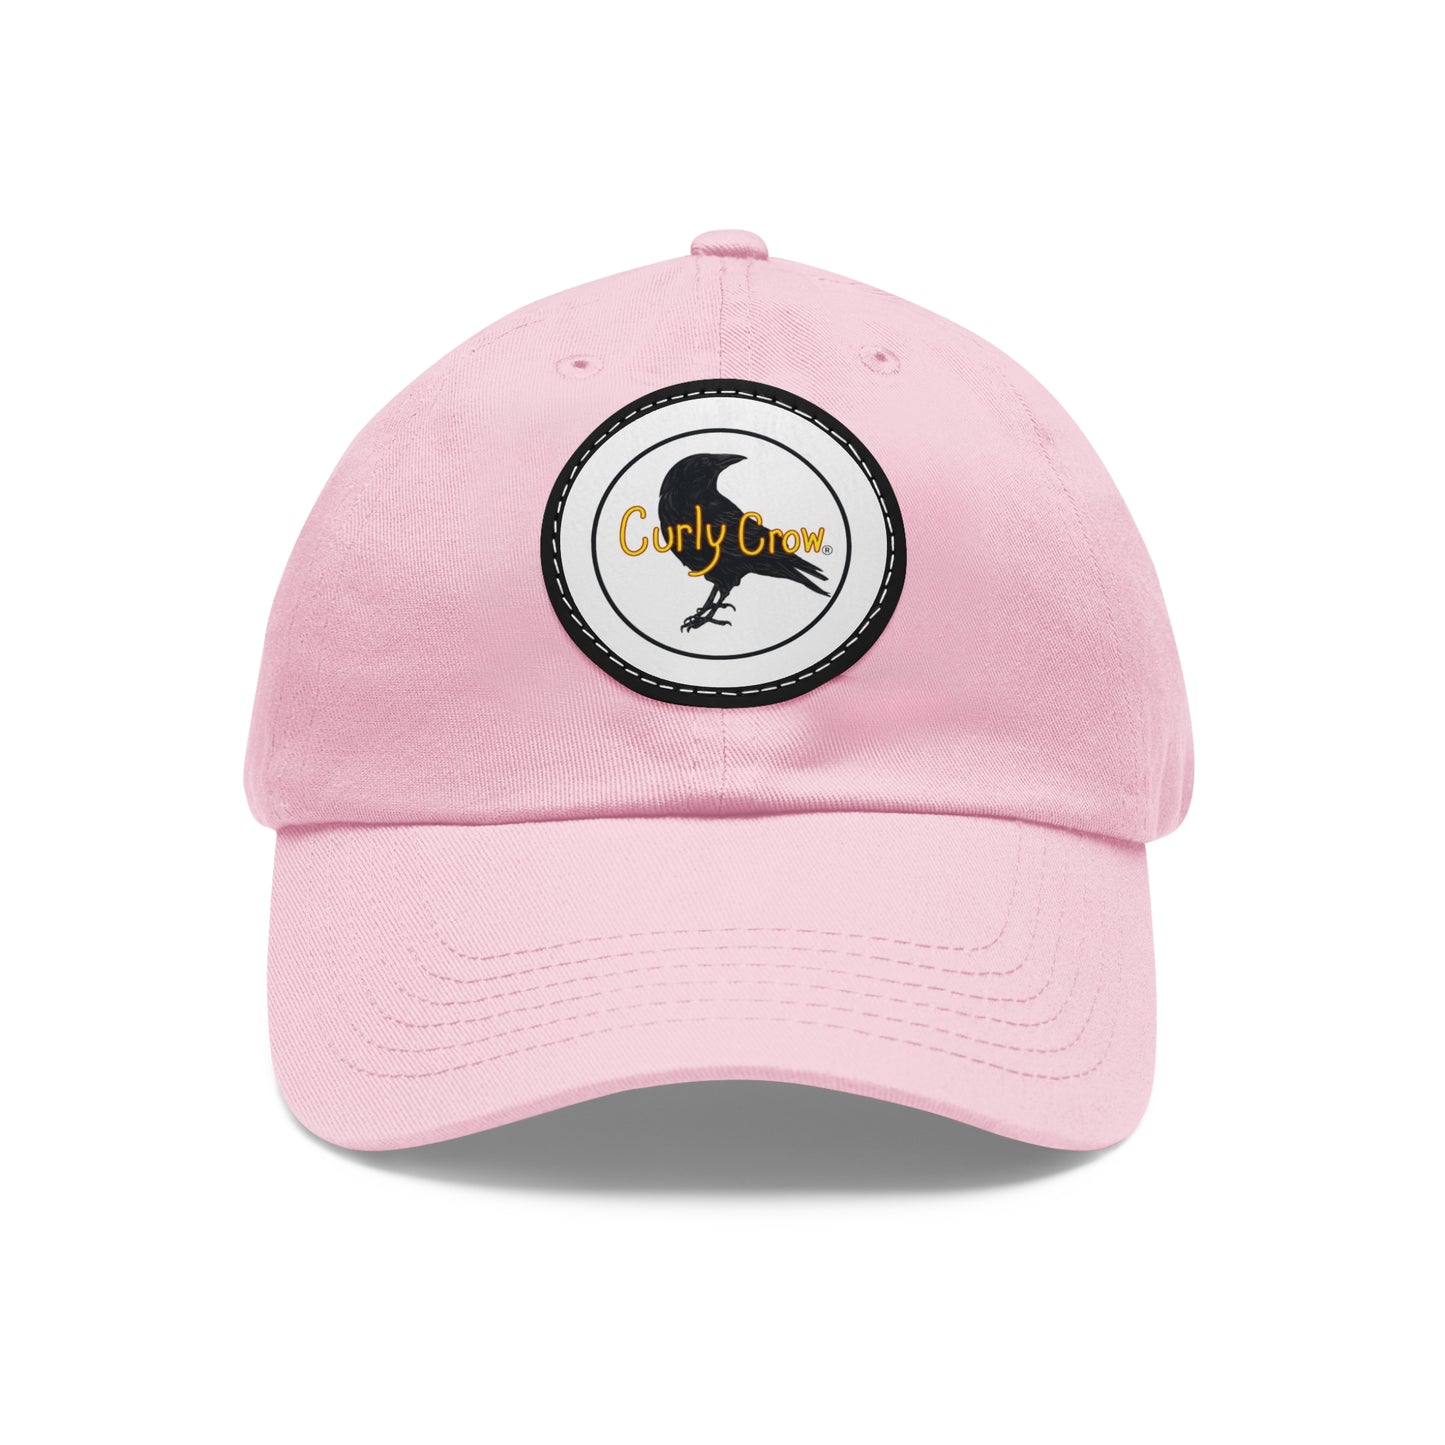 Curly Crow cap - pink baseball hat